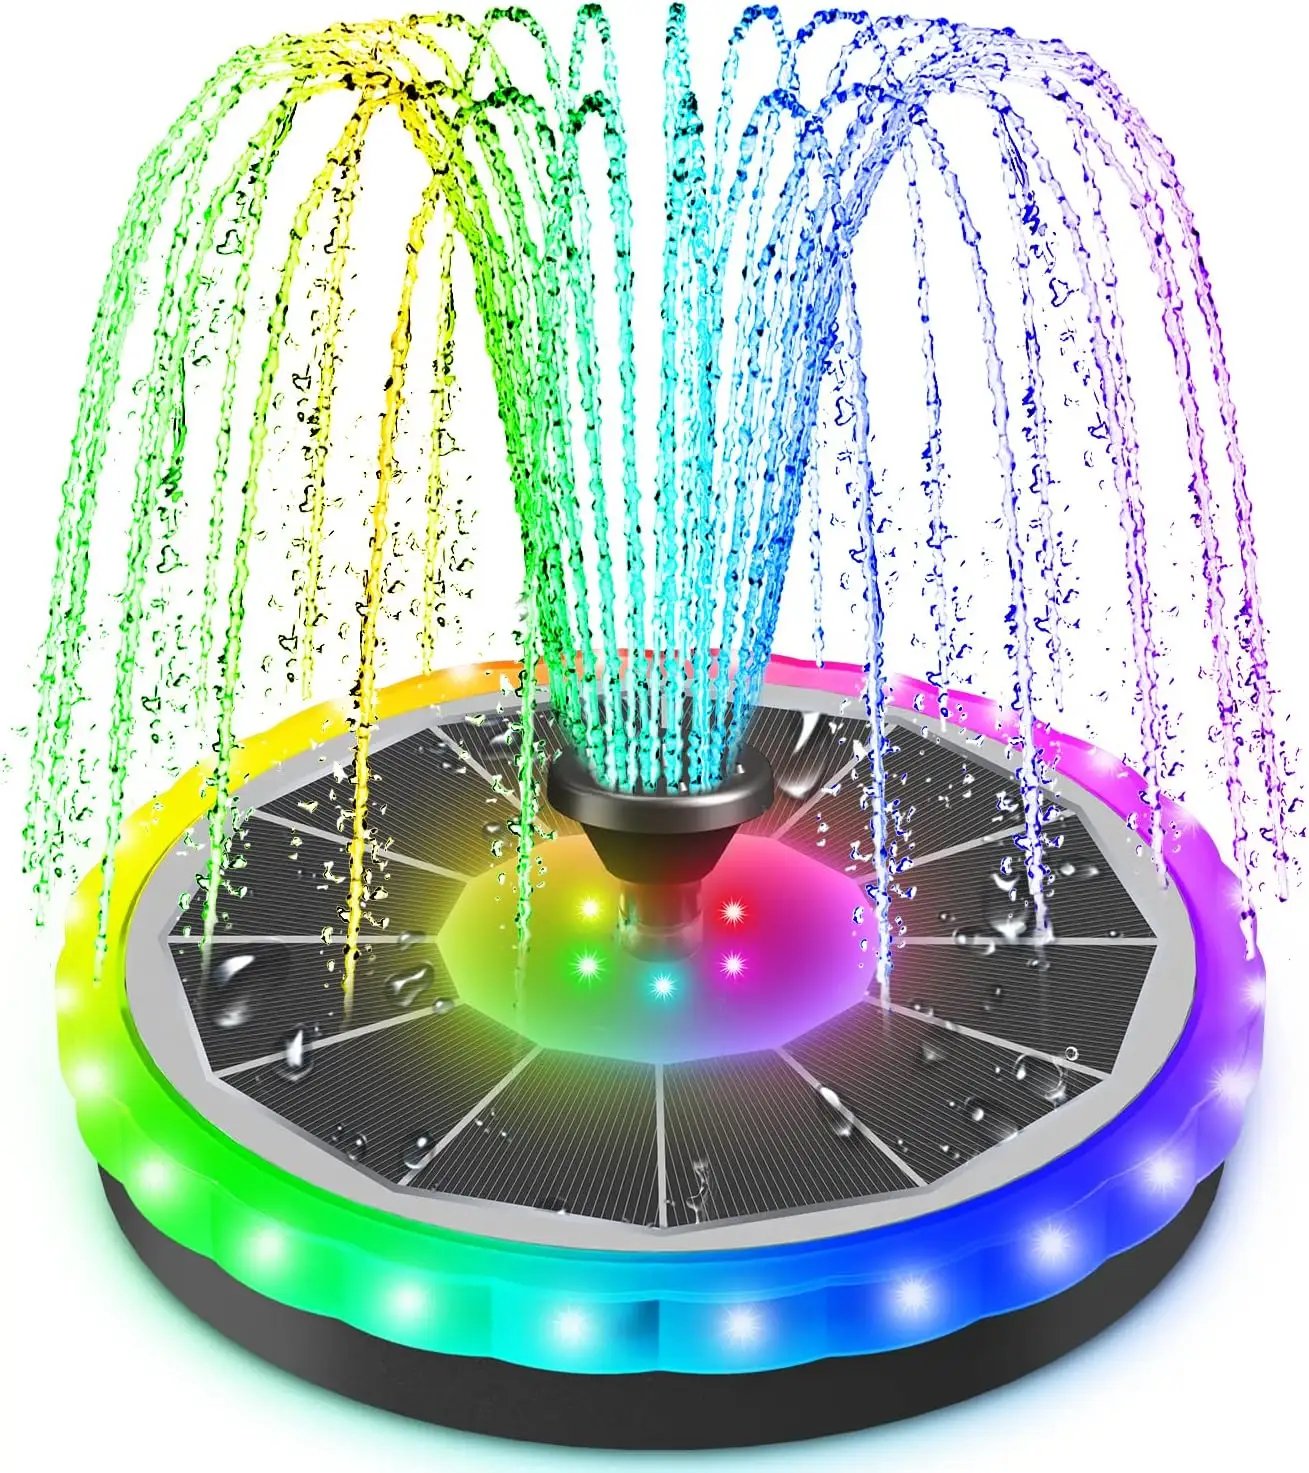 4W 2000 mAh battery Outdoor Solar Fountain with 7 Color LED Lights Garden Fountain Patio LED Fountain Pump